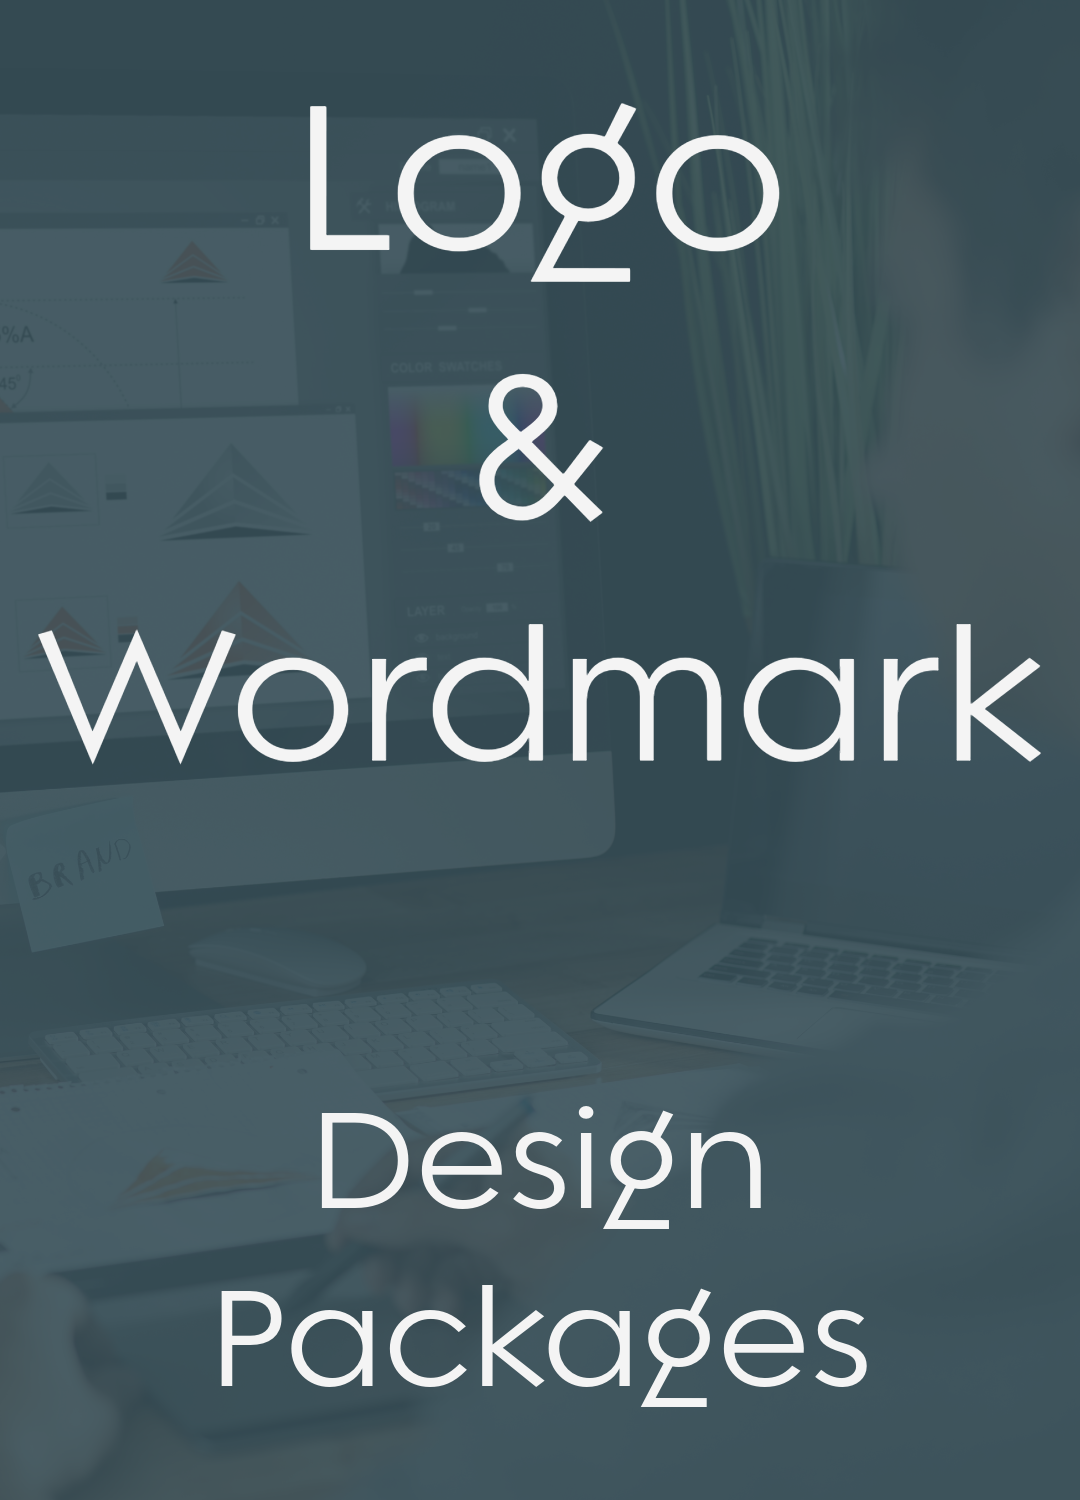 Logo and wordmark design